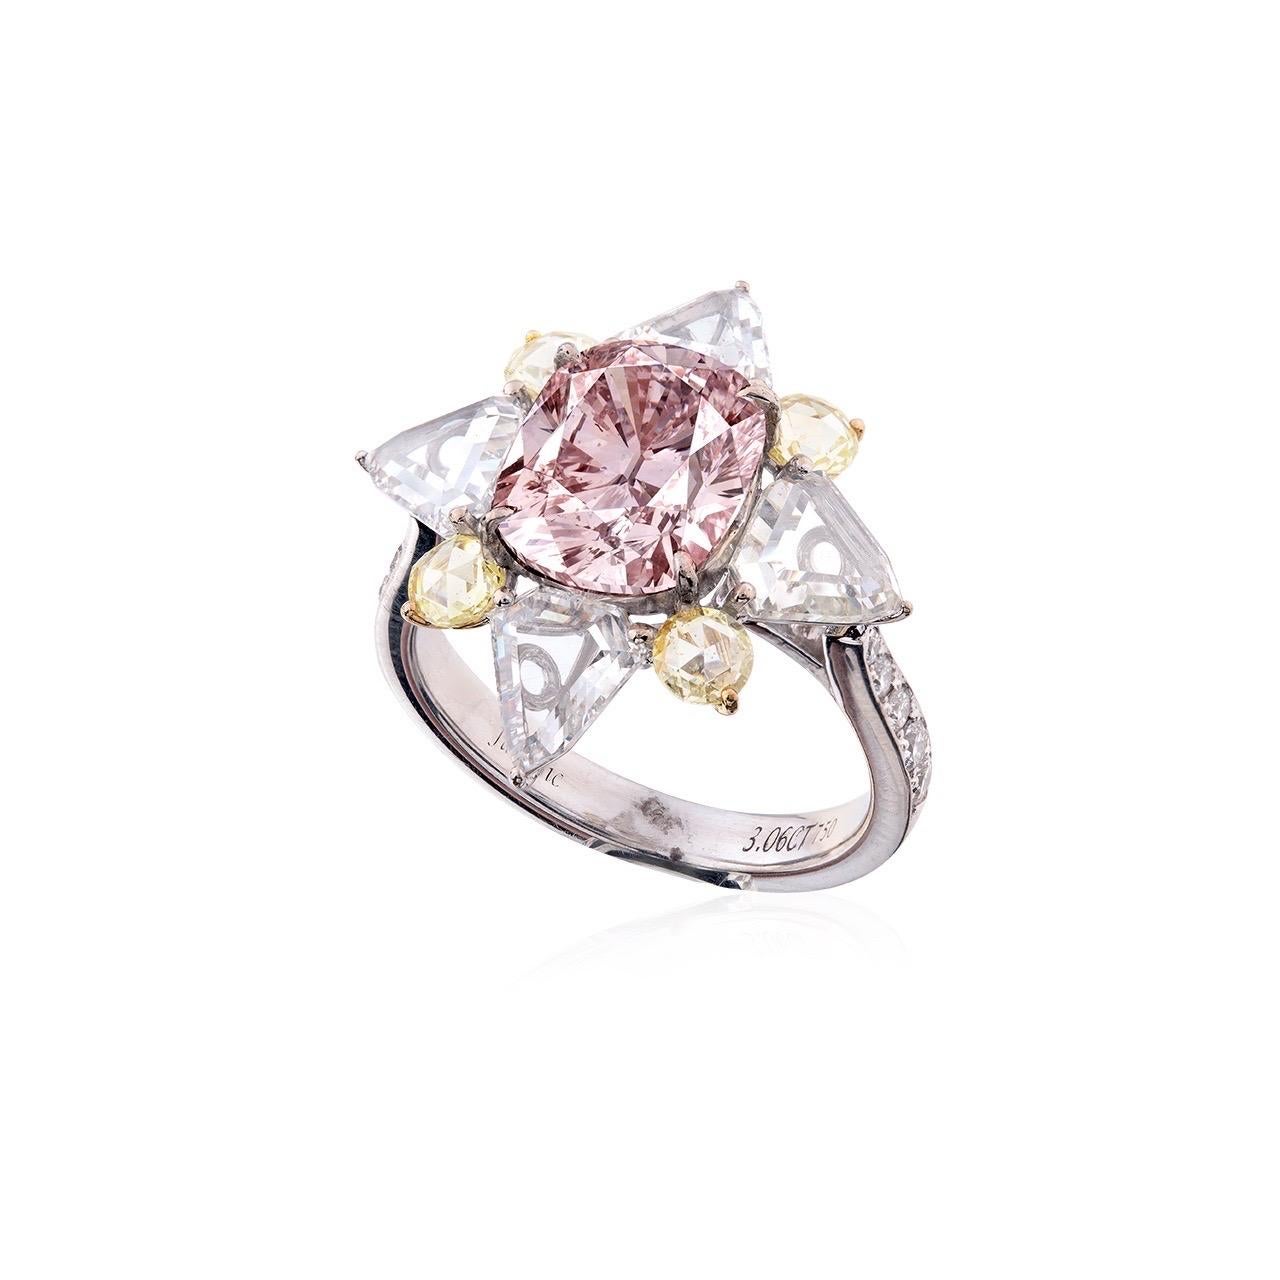 Cushion Cut Emilio Jewelry Gia Certified 3.20 Carat Light Pink Diamond Ring  For Sale